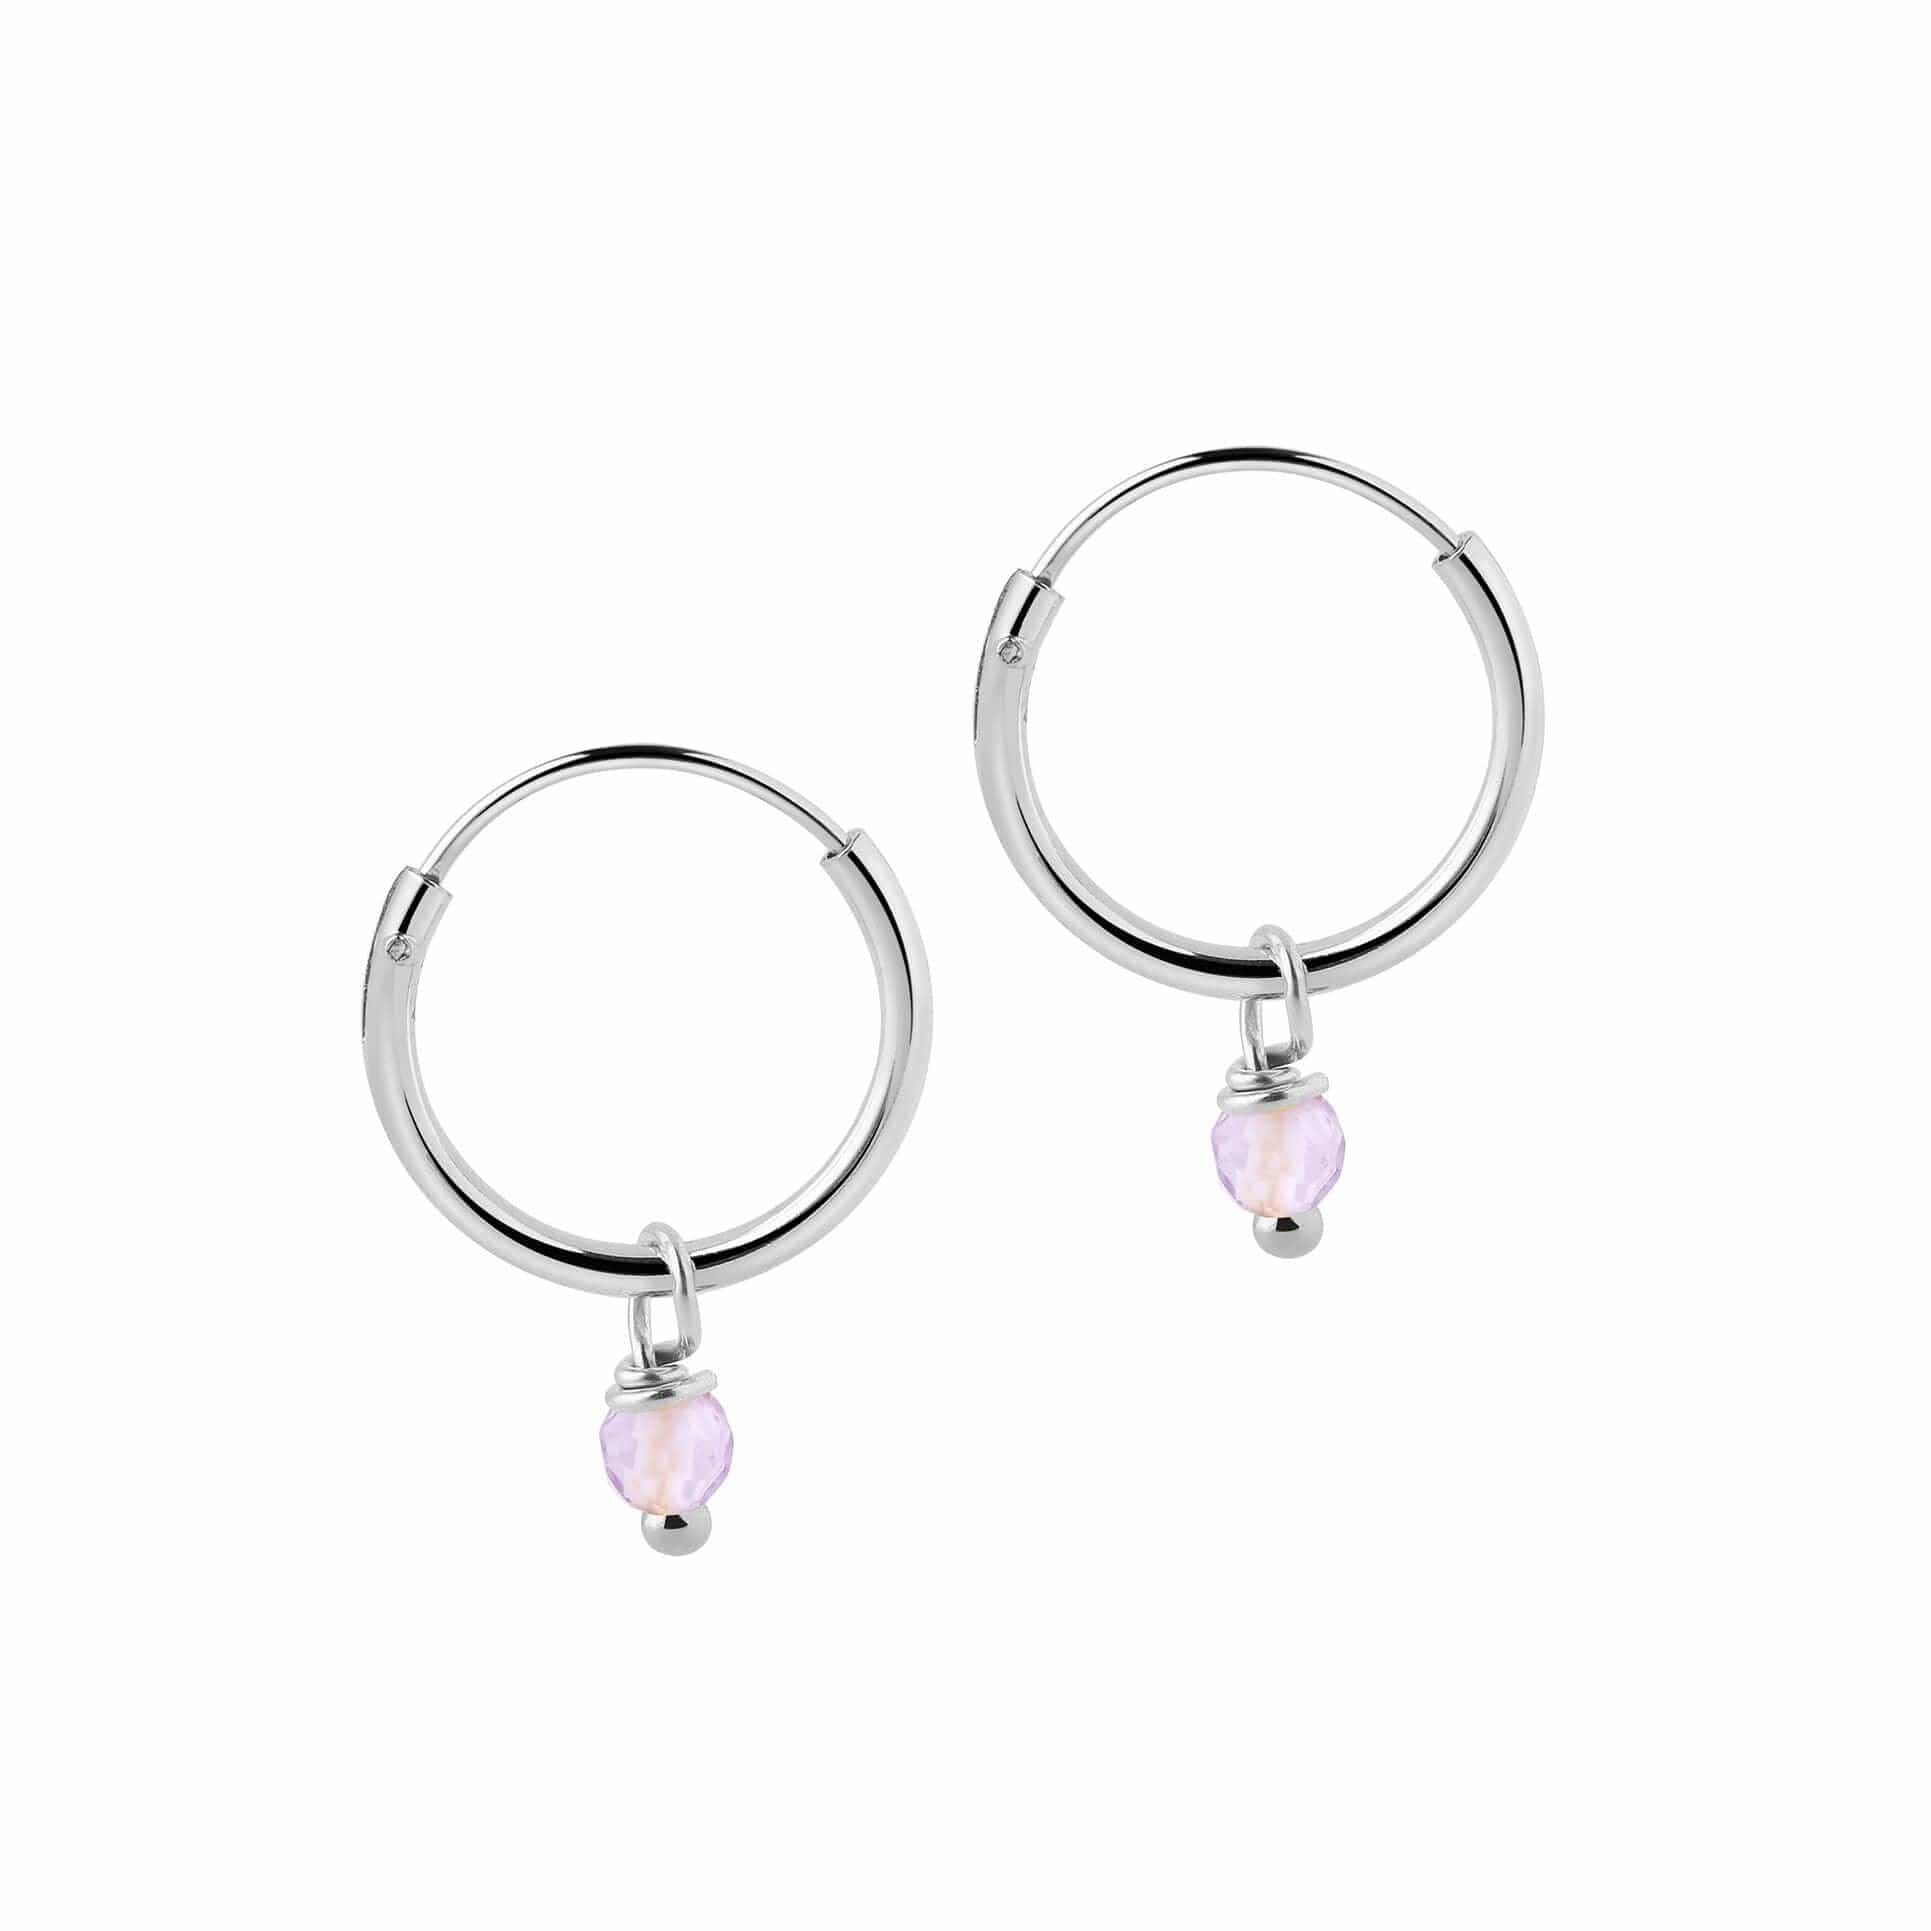 Small Silver Hoop Earrings with Purple Stone